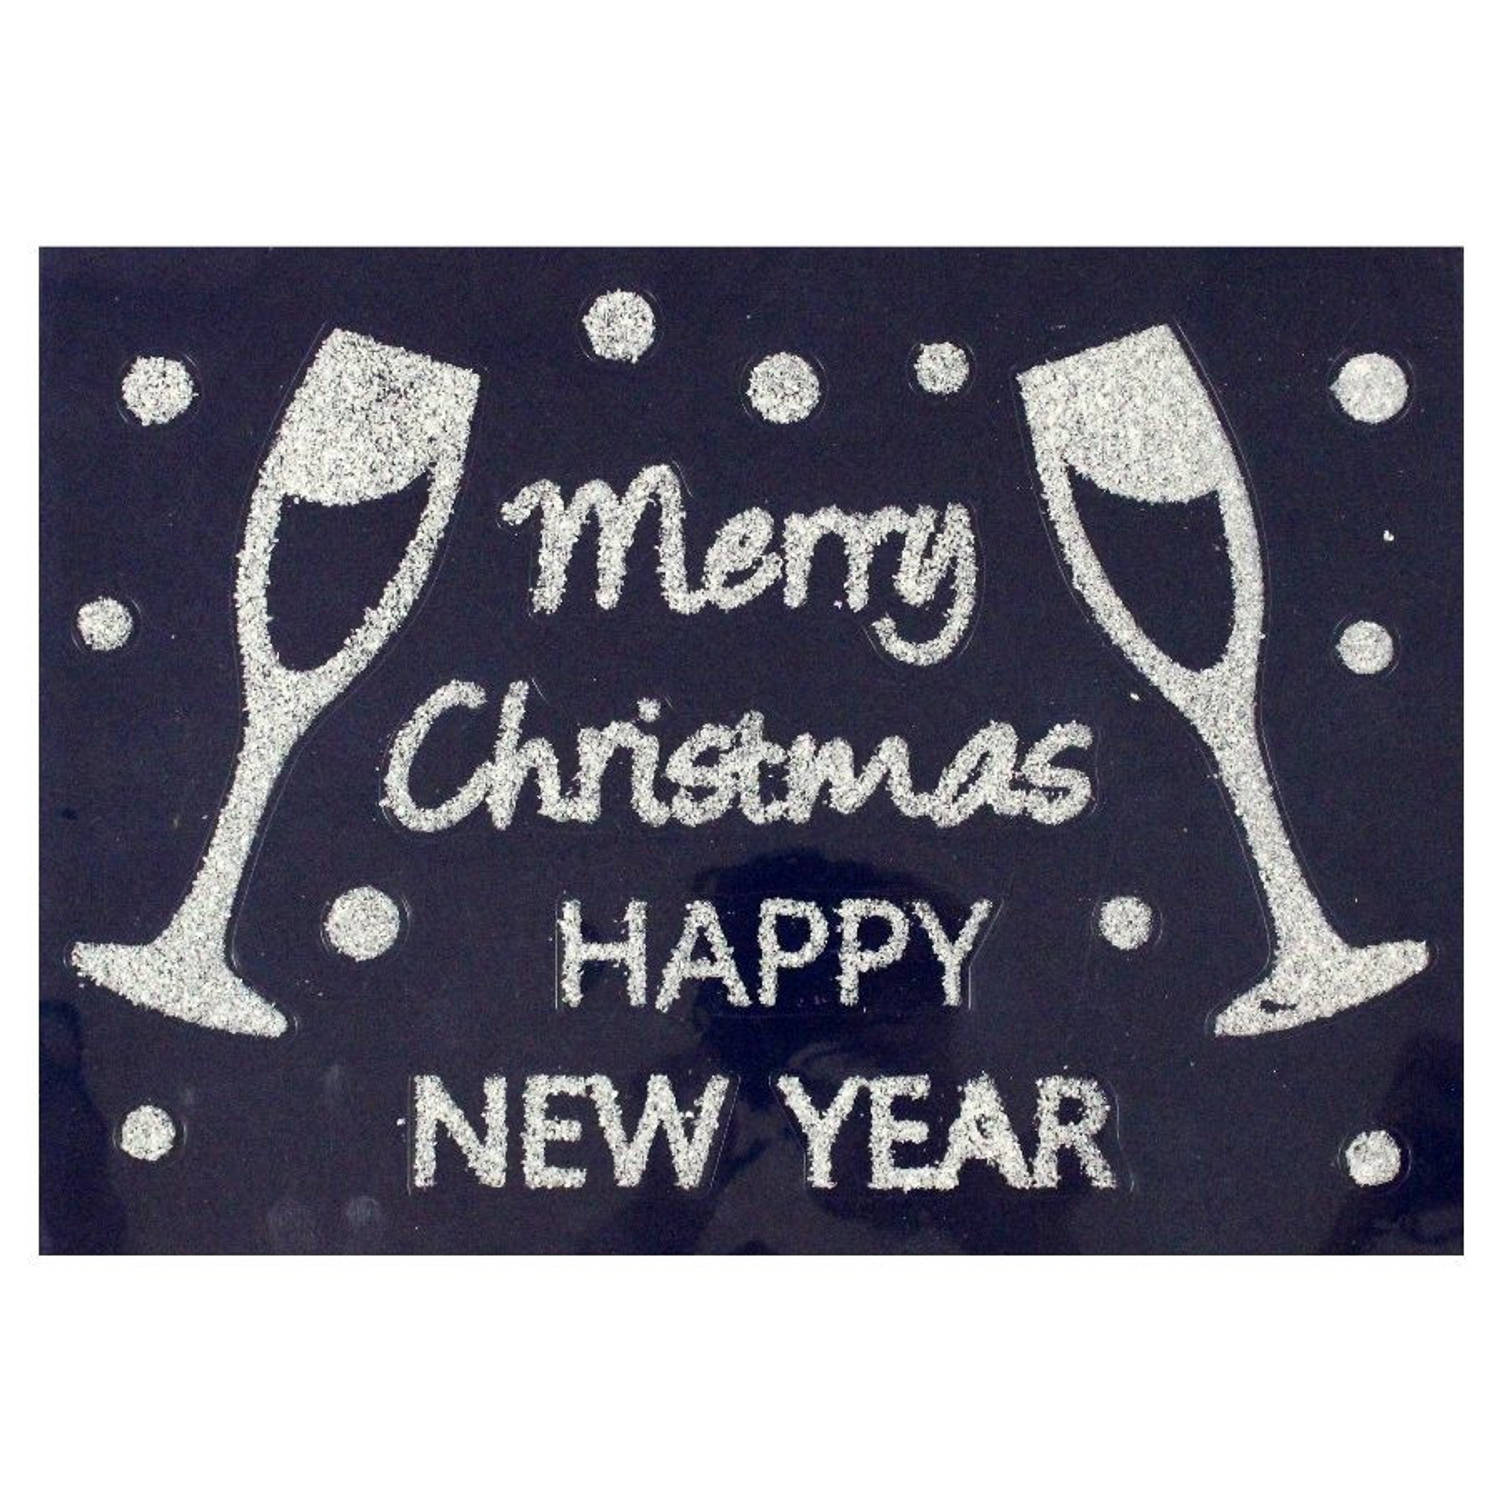 1x stuks velletjes kerst glitter raamstickers Merry Christmas 40 cm - Raamversiering/raamdecoratie stickers kerstversiering